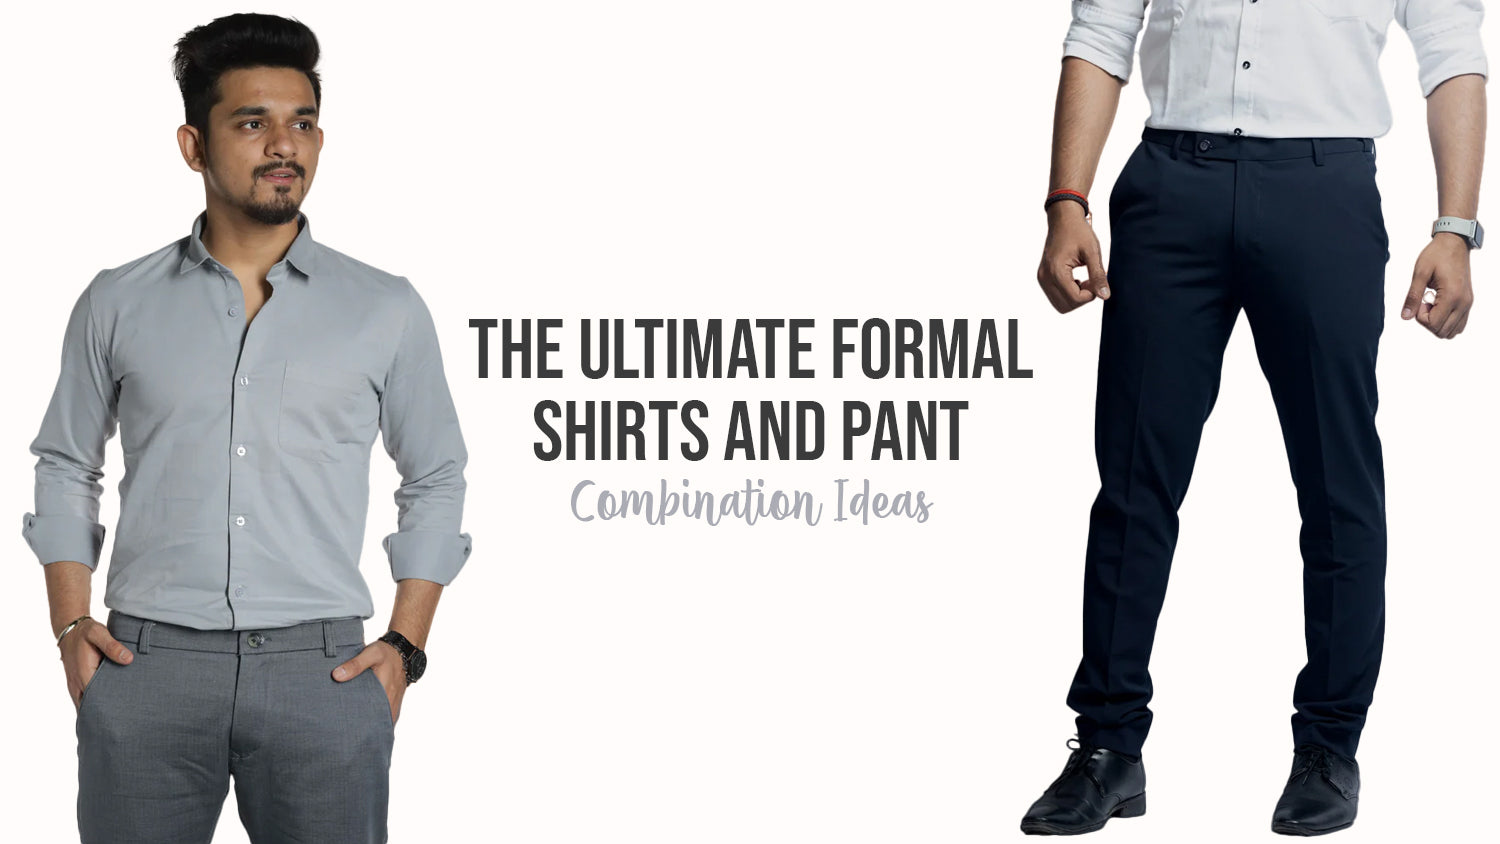 Formal shirt and pant combo - Evilato